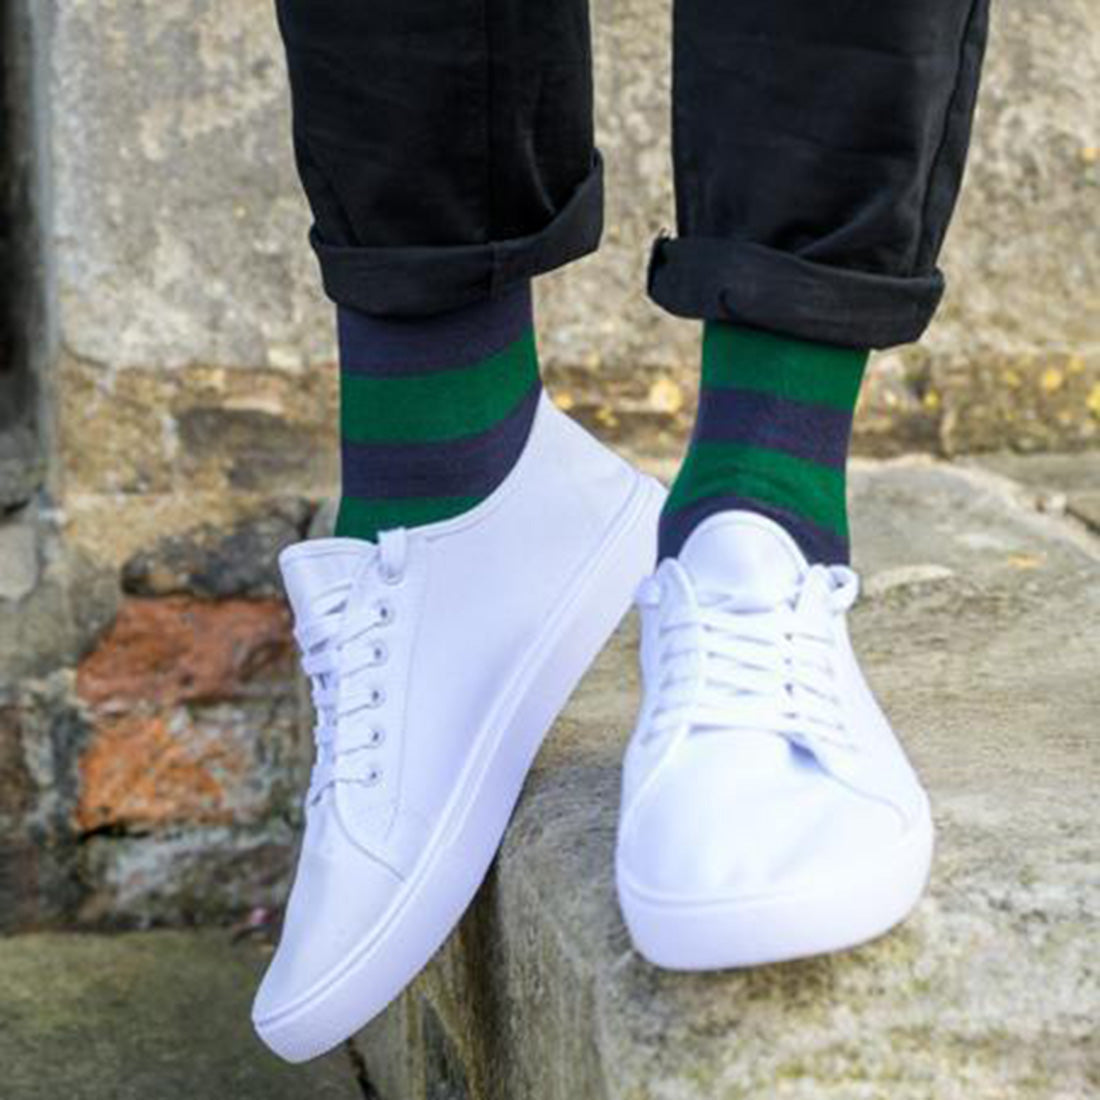 socks-racing-green-striped-bamboo-socks-2.jpg